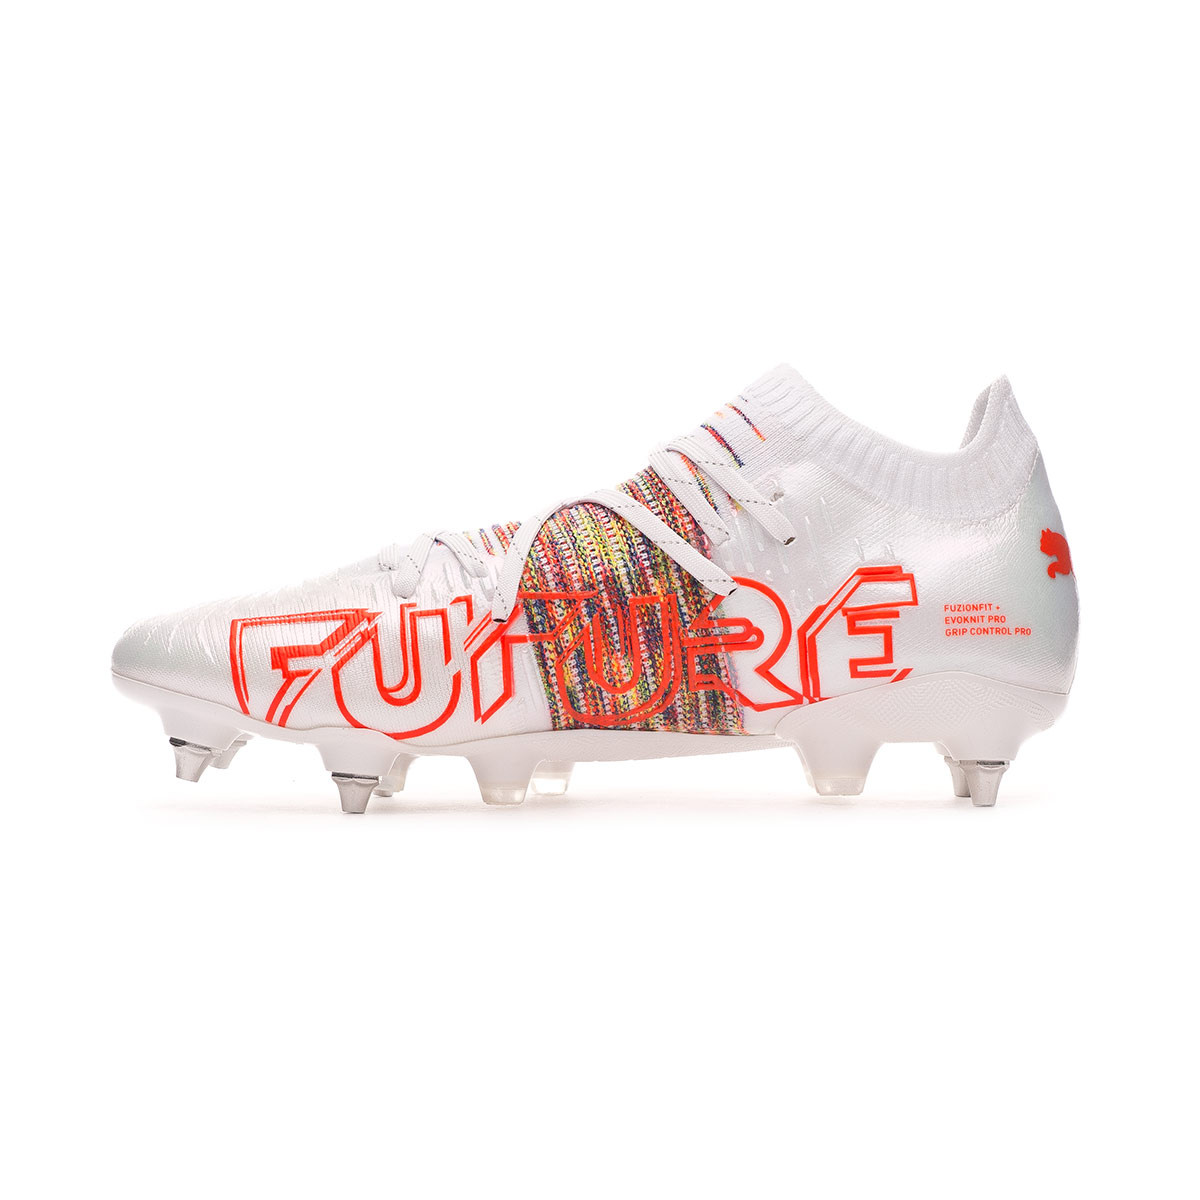 Football Boots Puma Future 1 1 Mxsg Puma White Red Blast Futbol Emotion